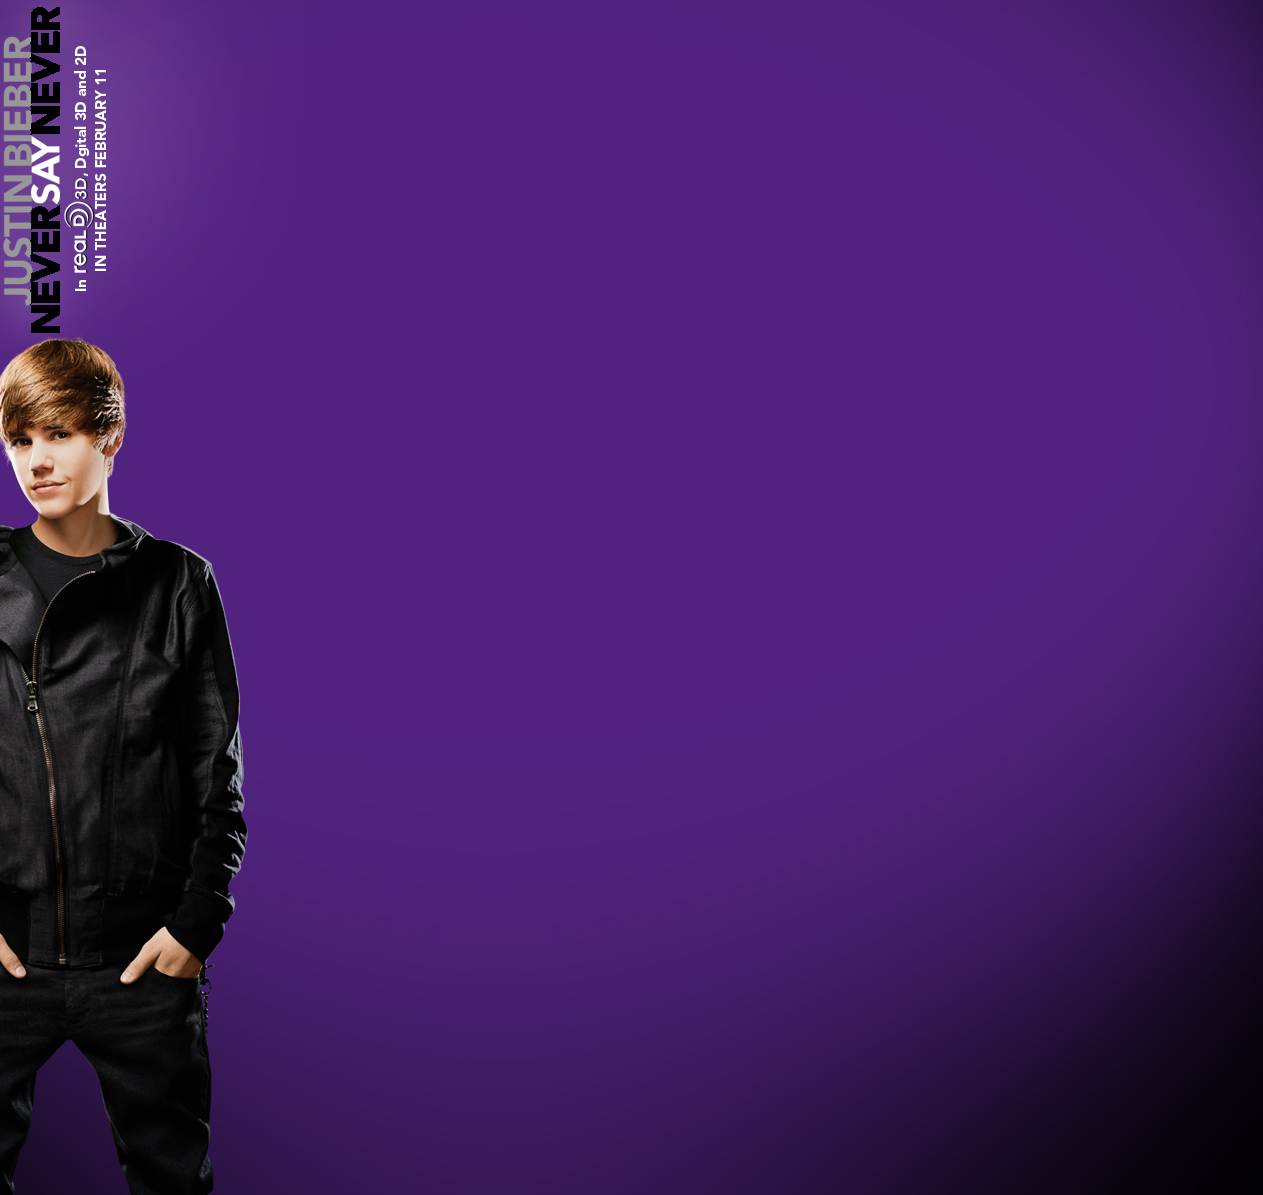 Fun Plan Justin Bieber Purple Background